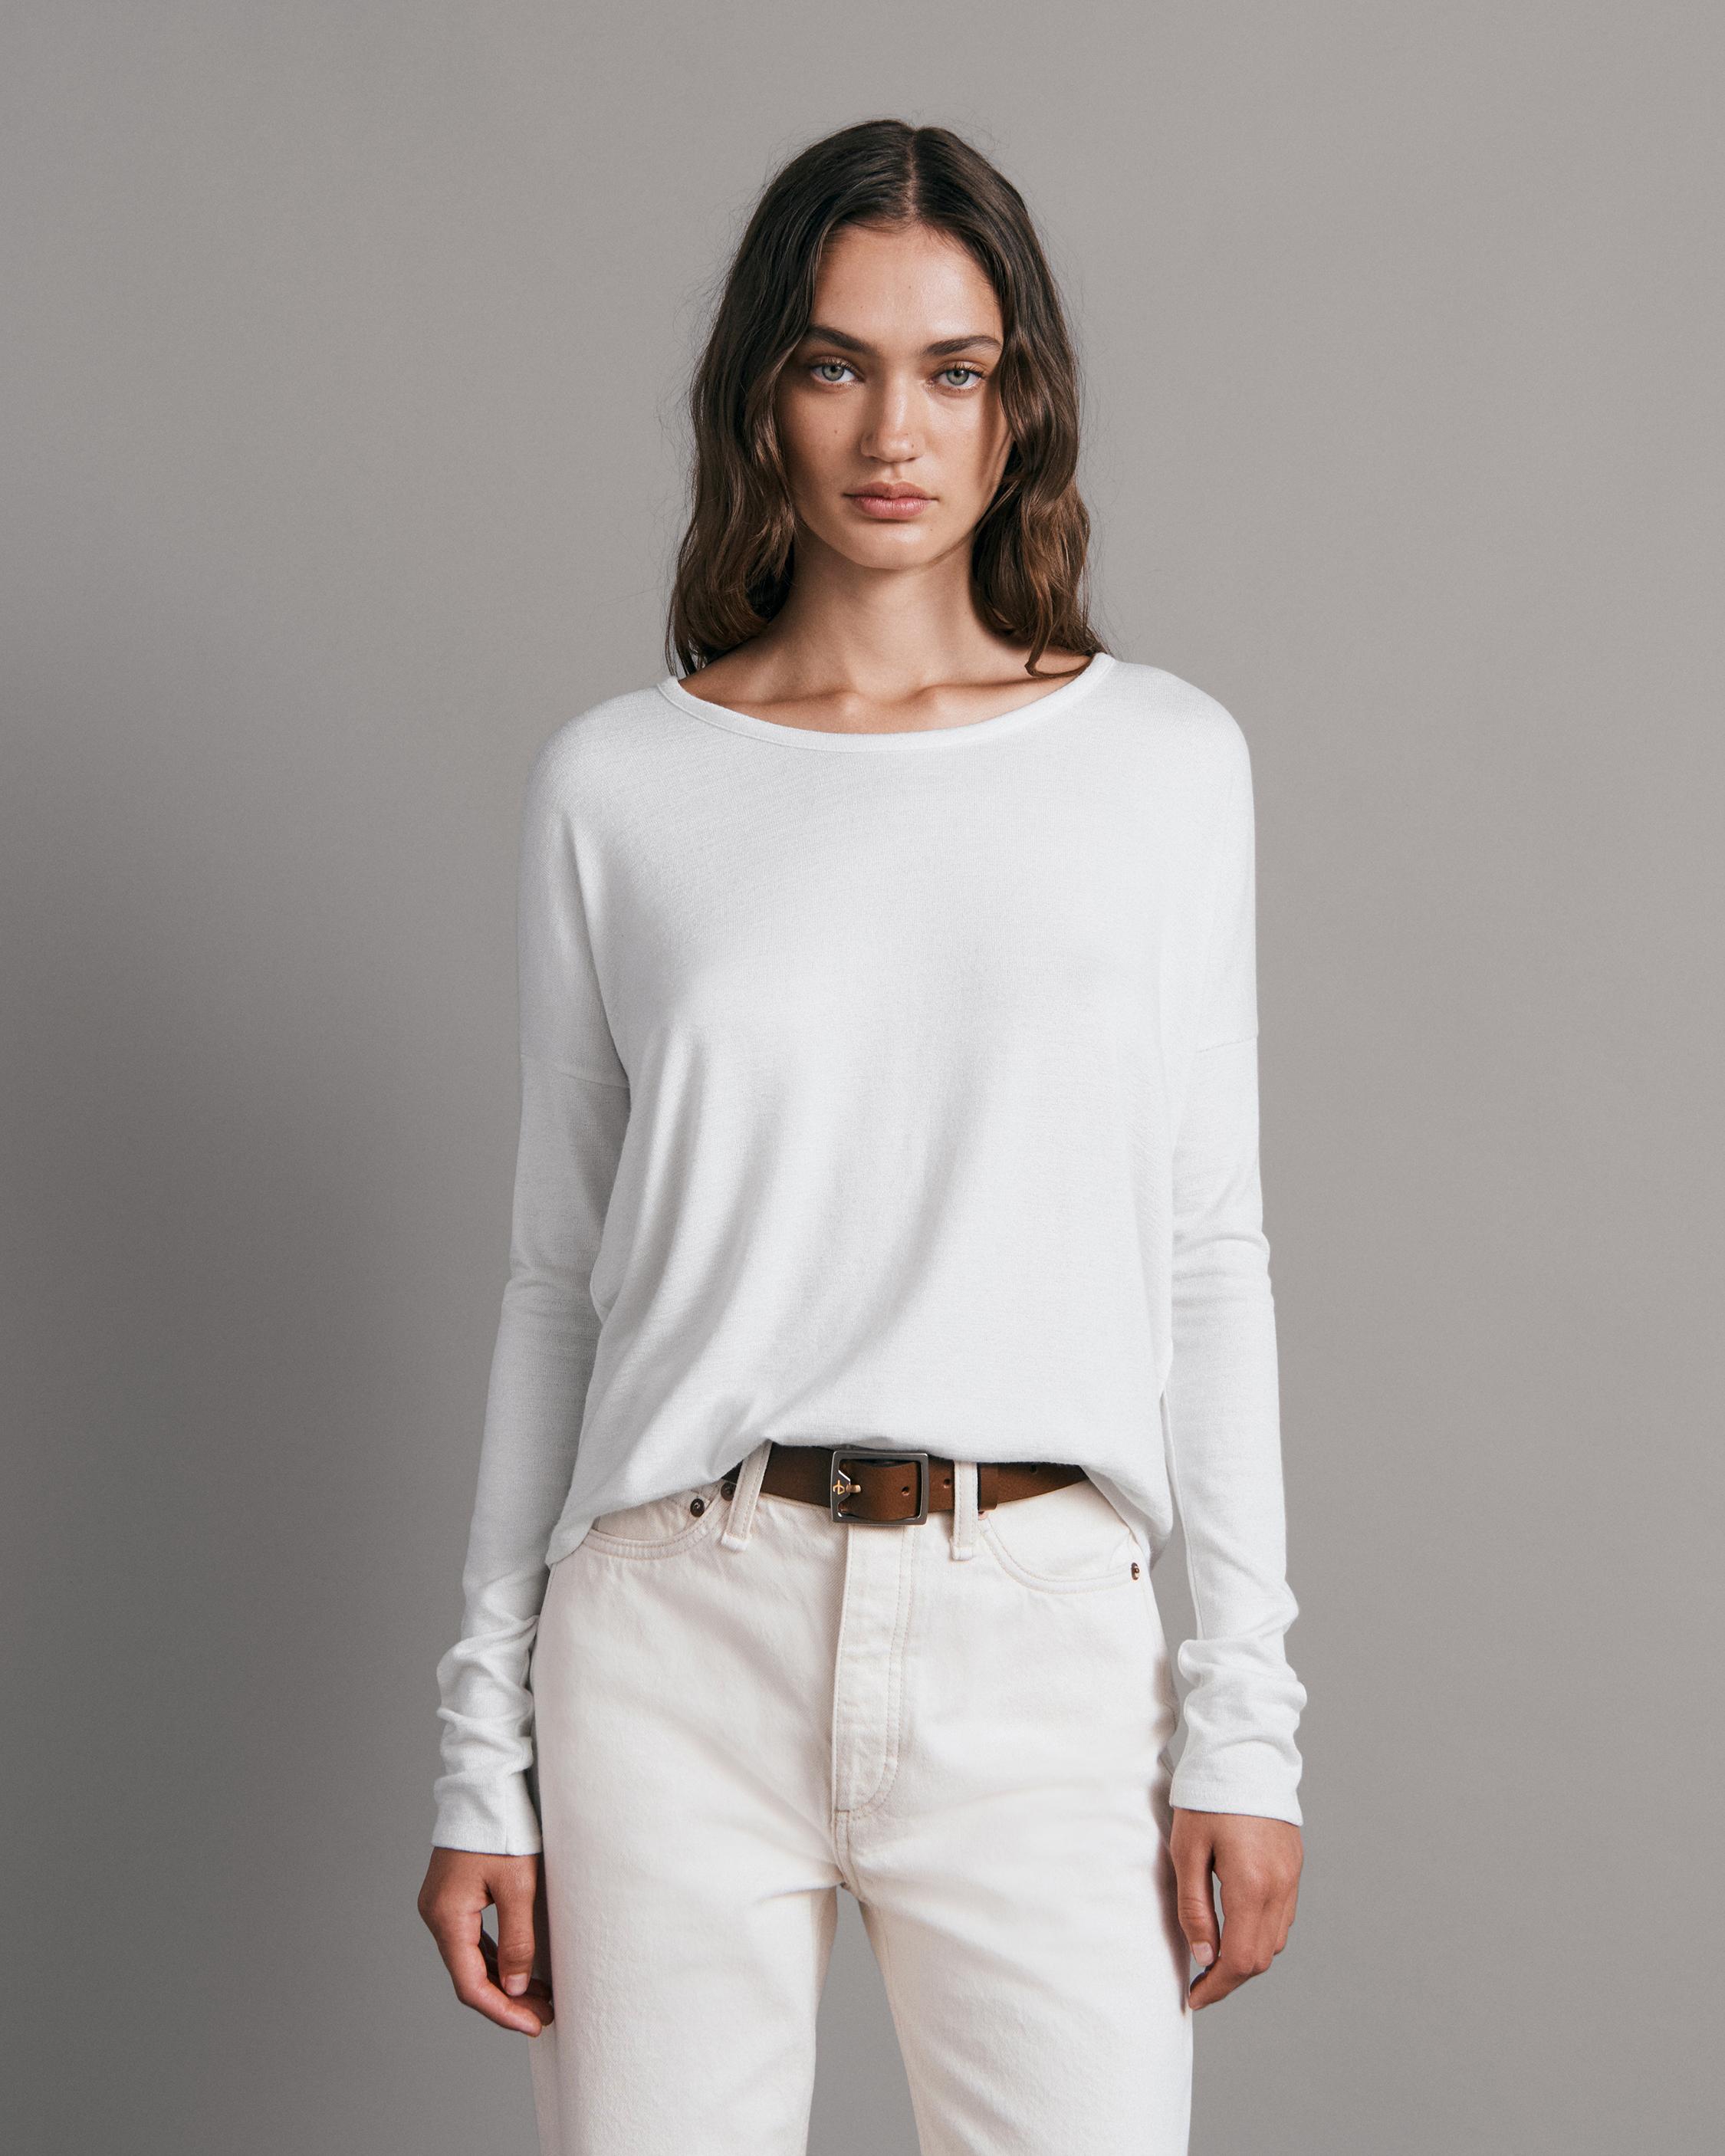 The Knit White Long Sleeve T-Shirt | rag & bone